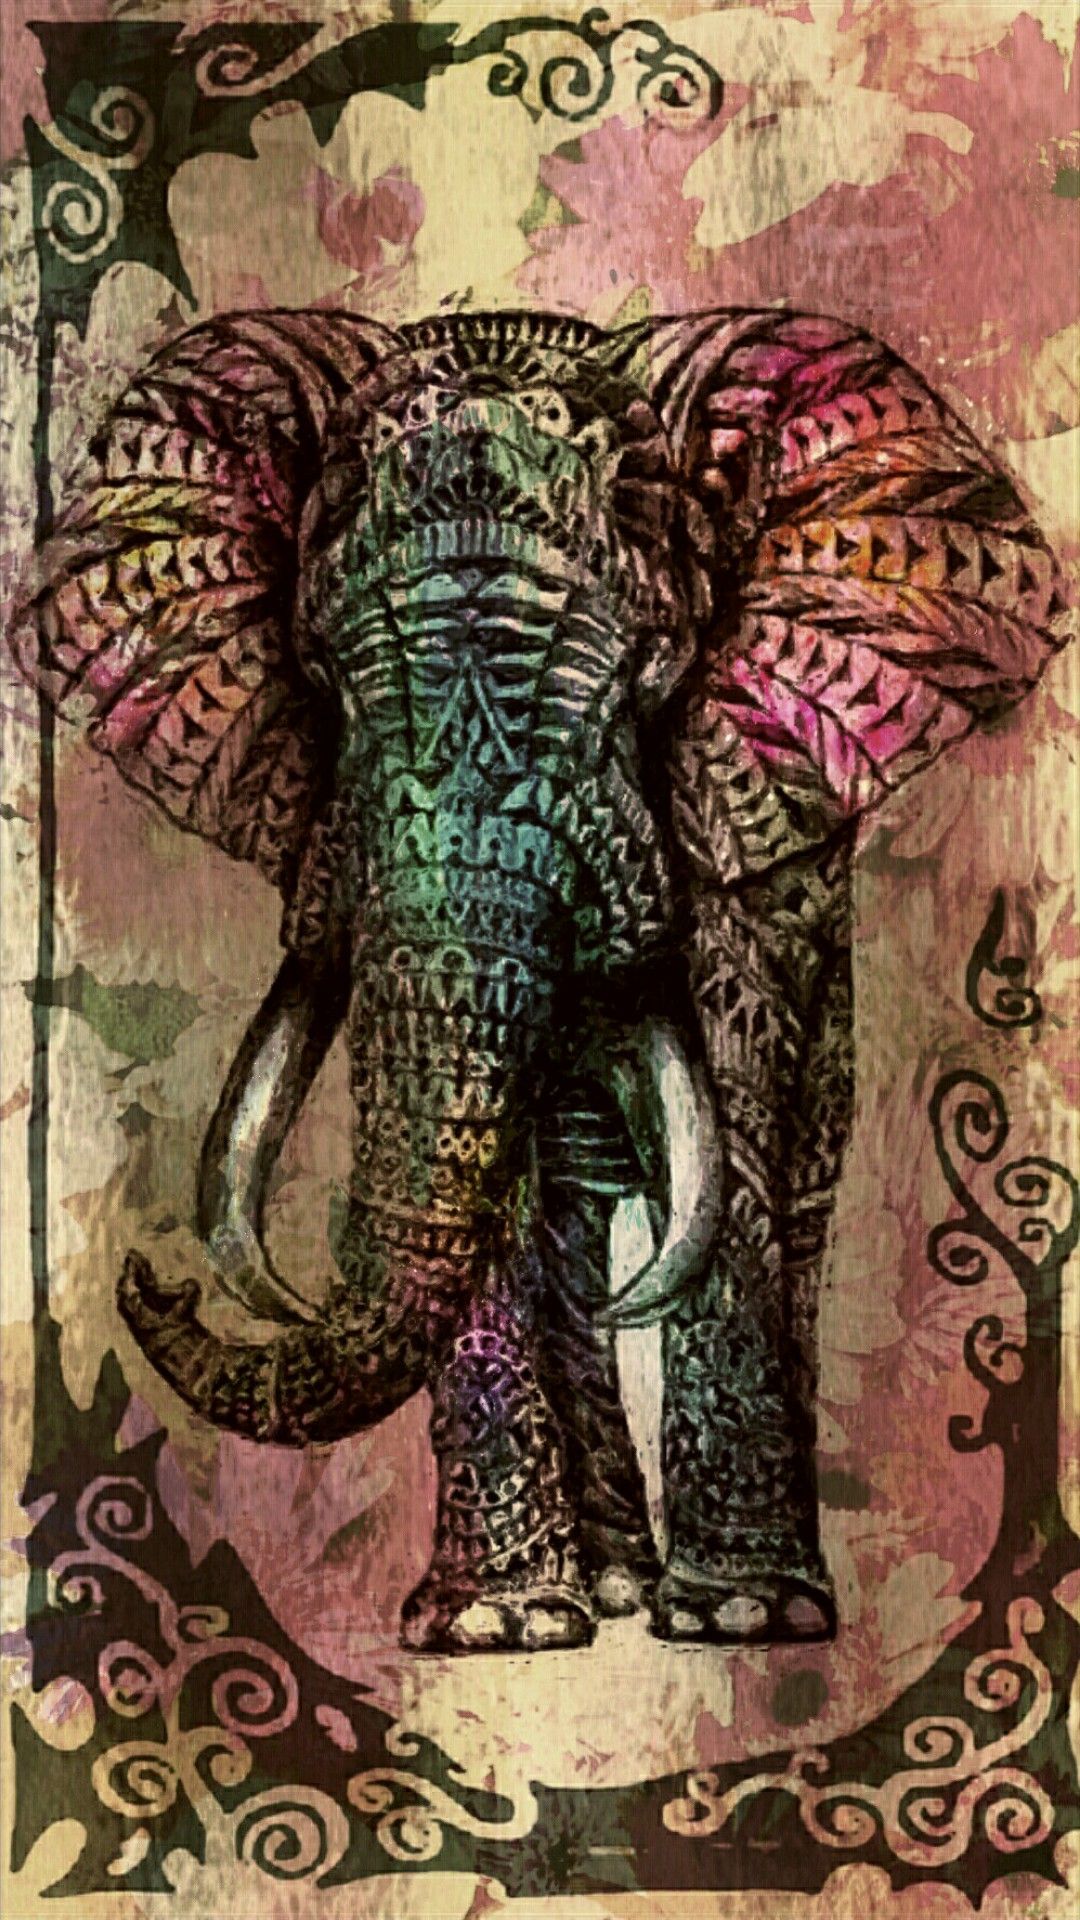 fond d'écran iphone éléphant,l'éléphant,éléphants et mammouths,éléphant indien,art,illustration